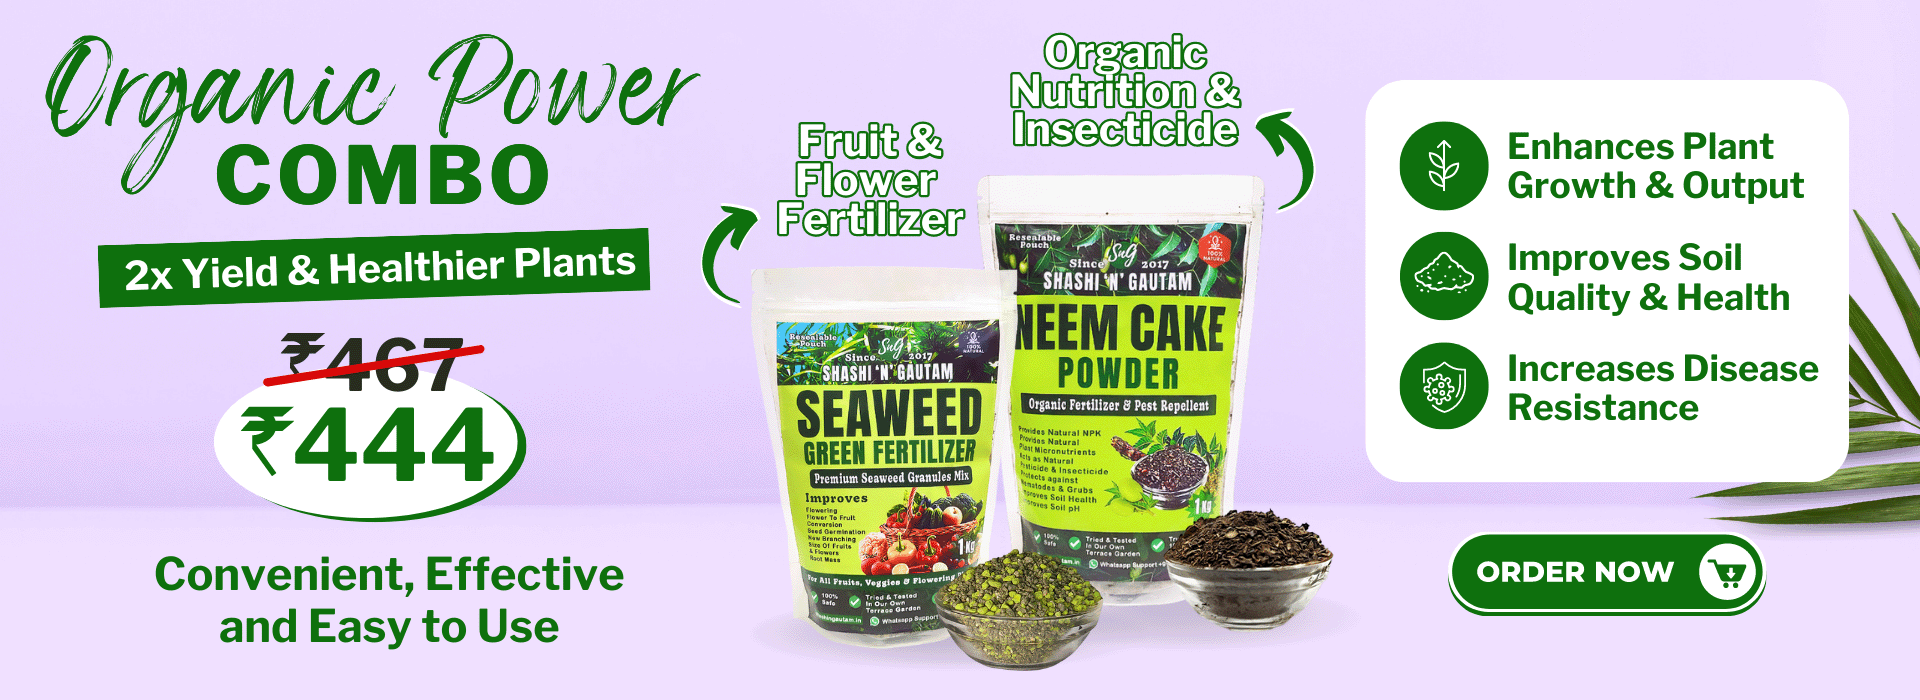 organic power combo Seaweed Fertilizer and Neem cake fertilizer - Shashi N Gautam Web Shop HPR